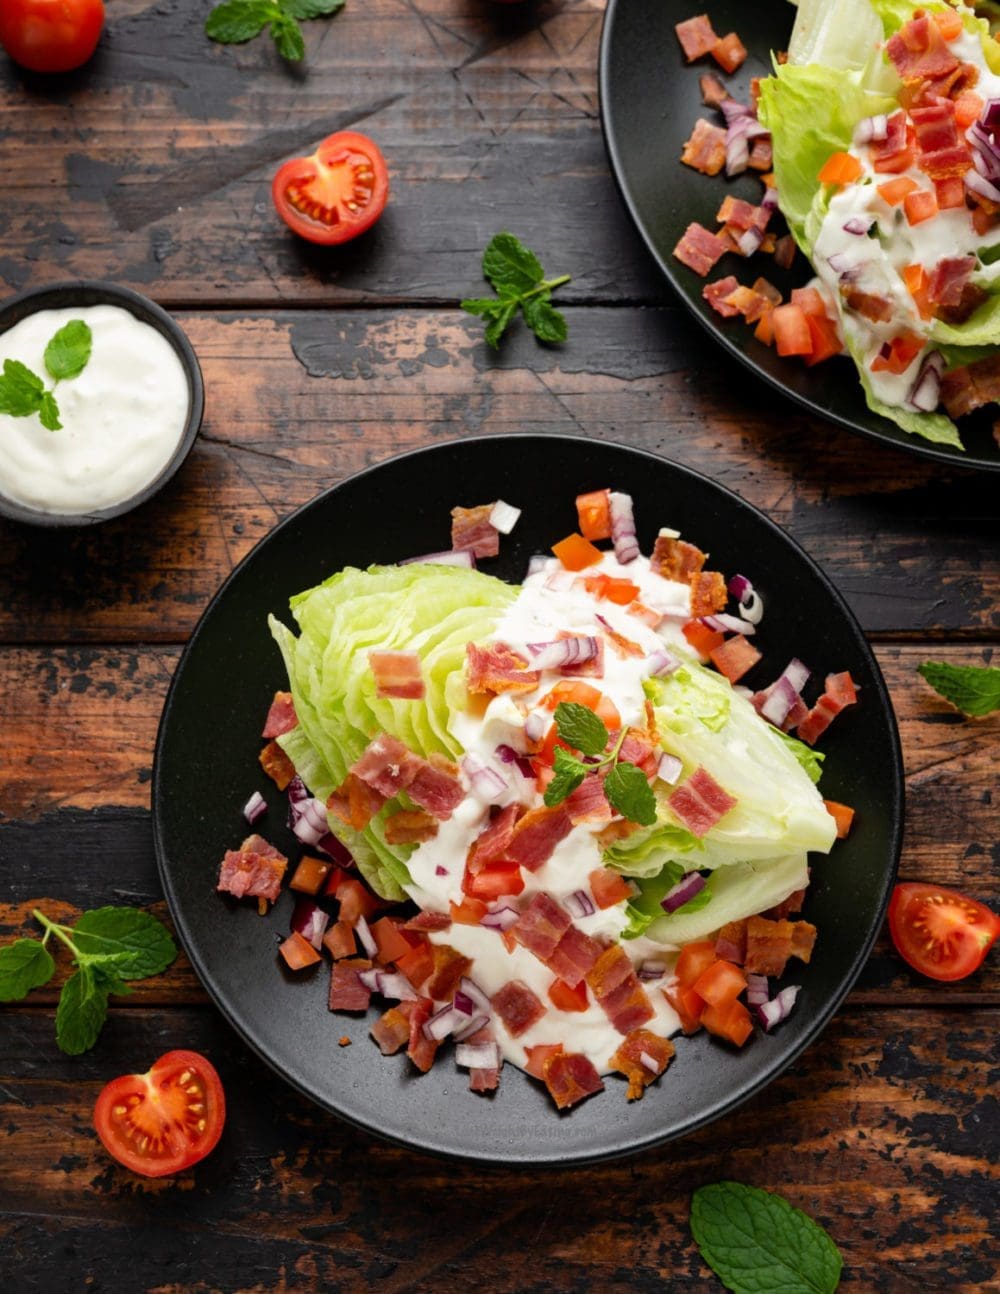 Steakhouse Wedge Salad Recipe